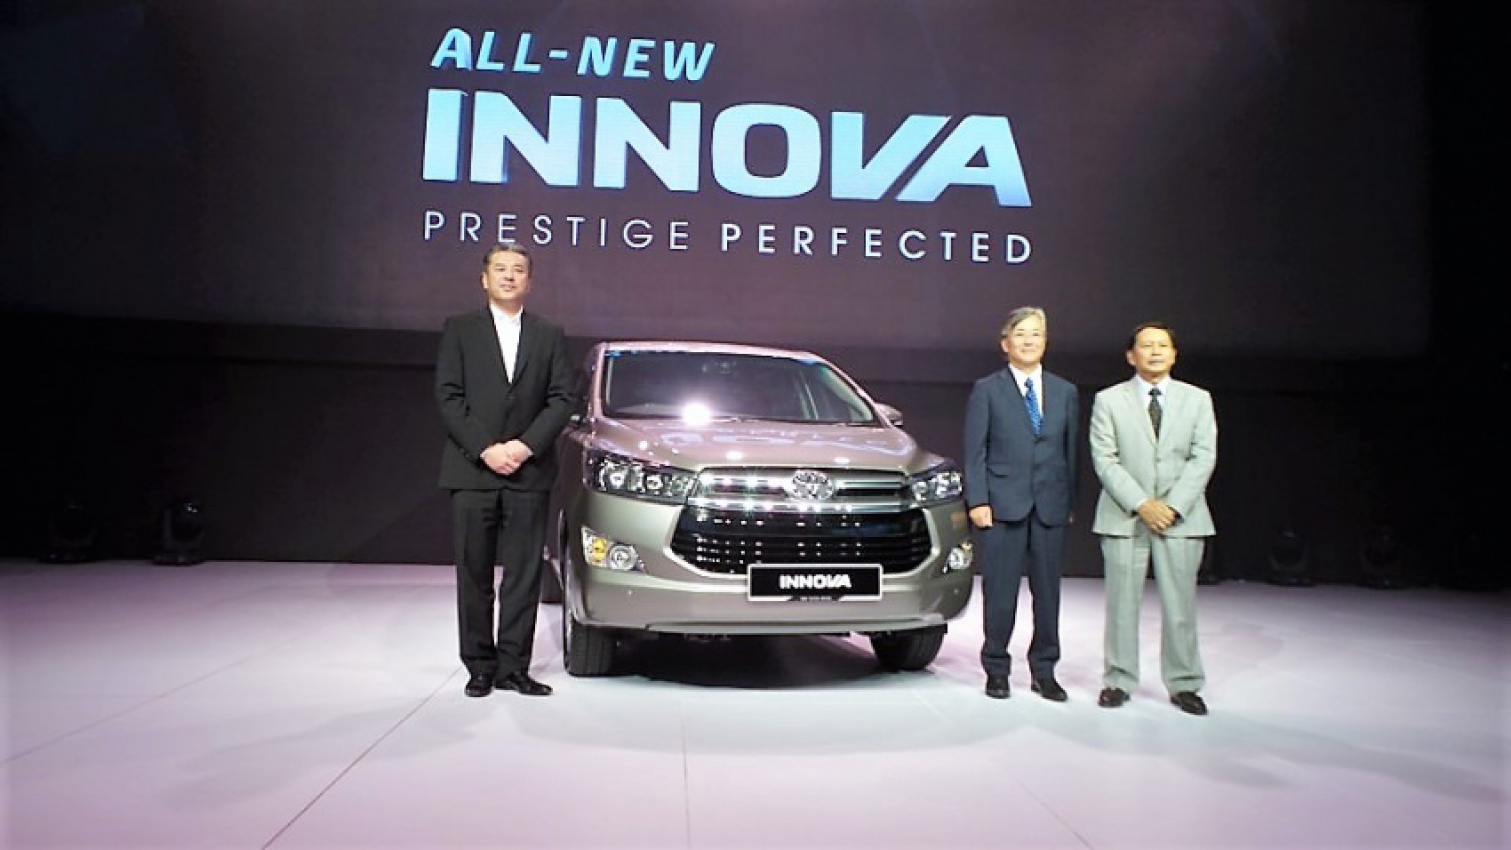 autos, car brands, cars, toyota, umw toyota, umwt, umw toyota launches all-new 2nd generation innova